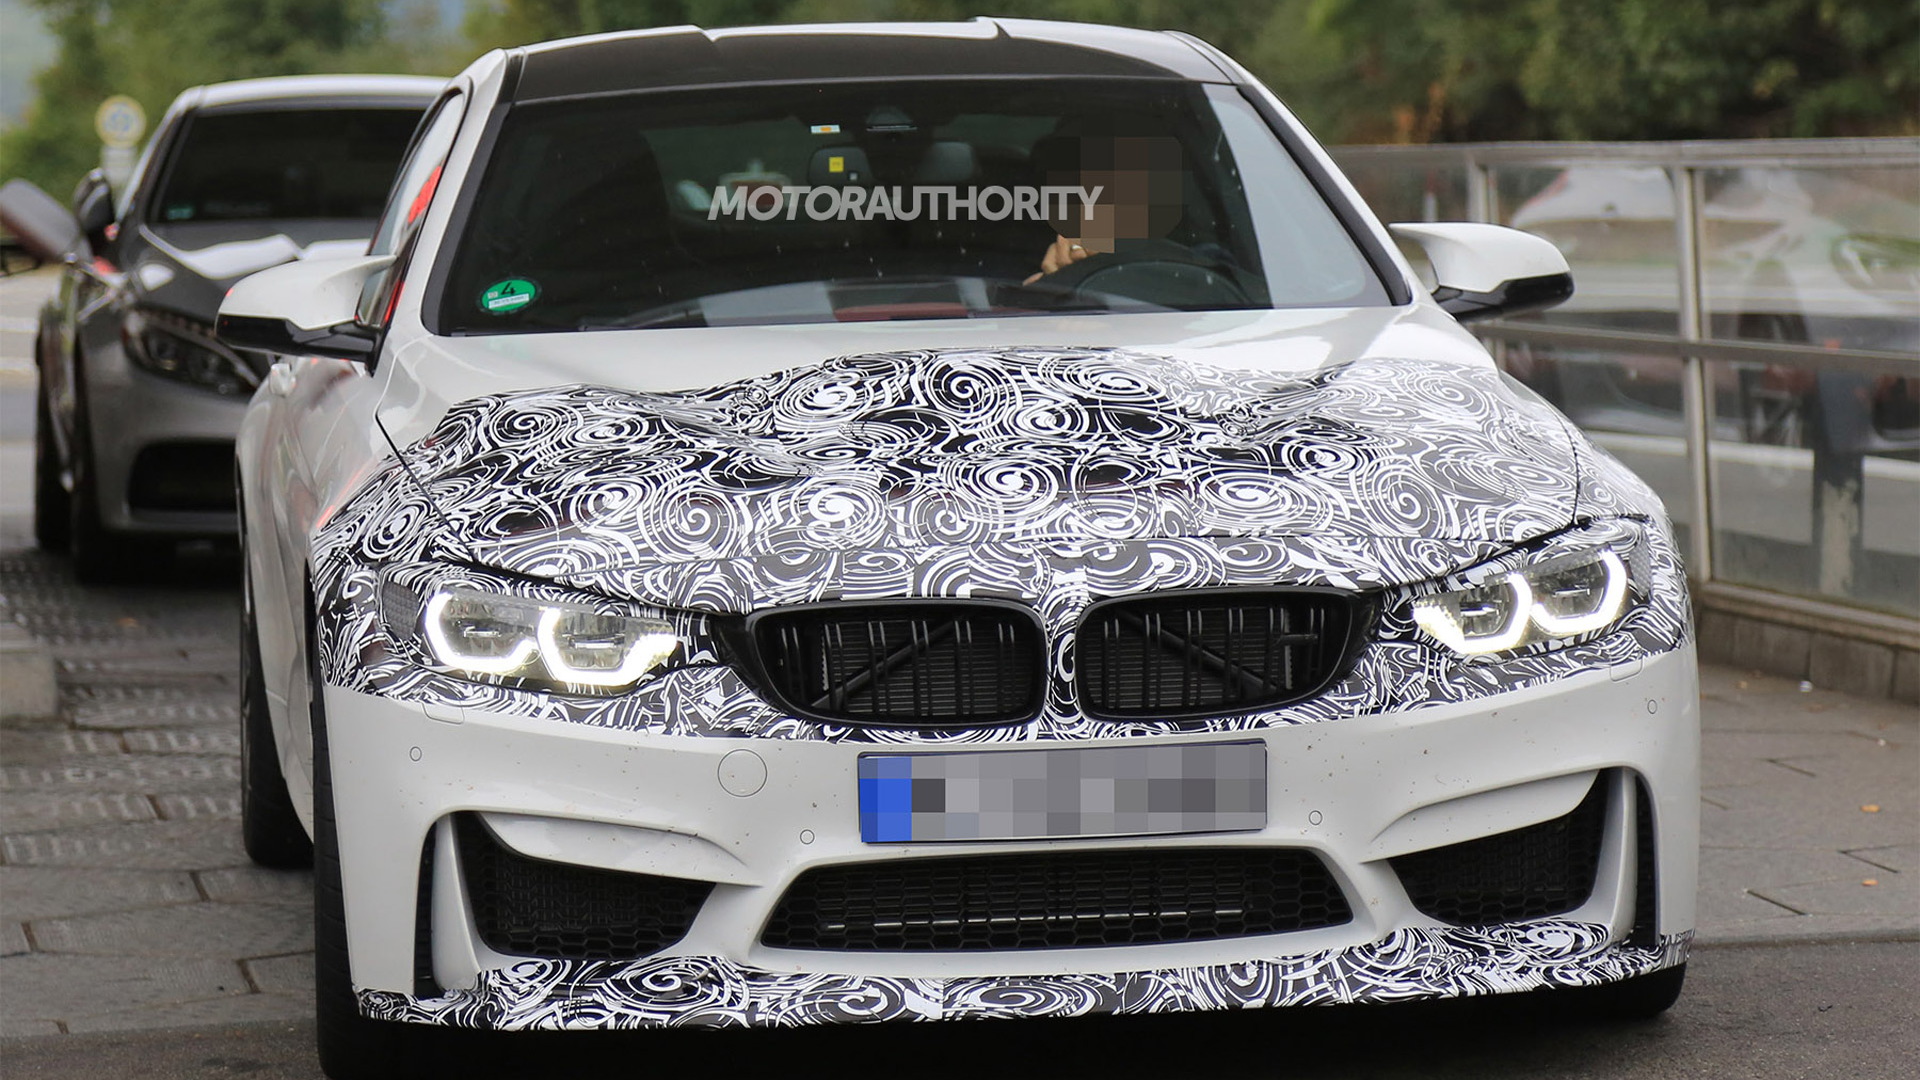 2018 BMW M4 facelift spy shots - Image via S. Baldauf/SB-Medien